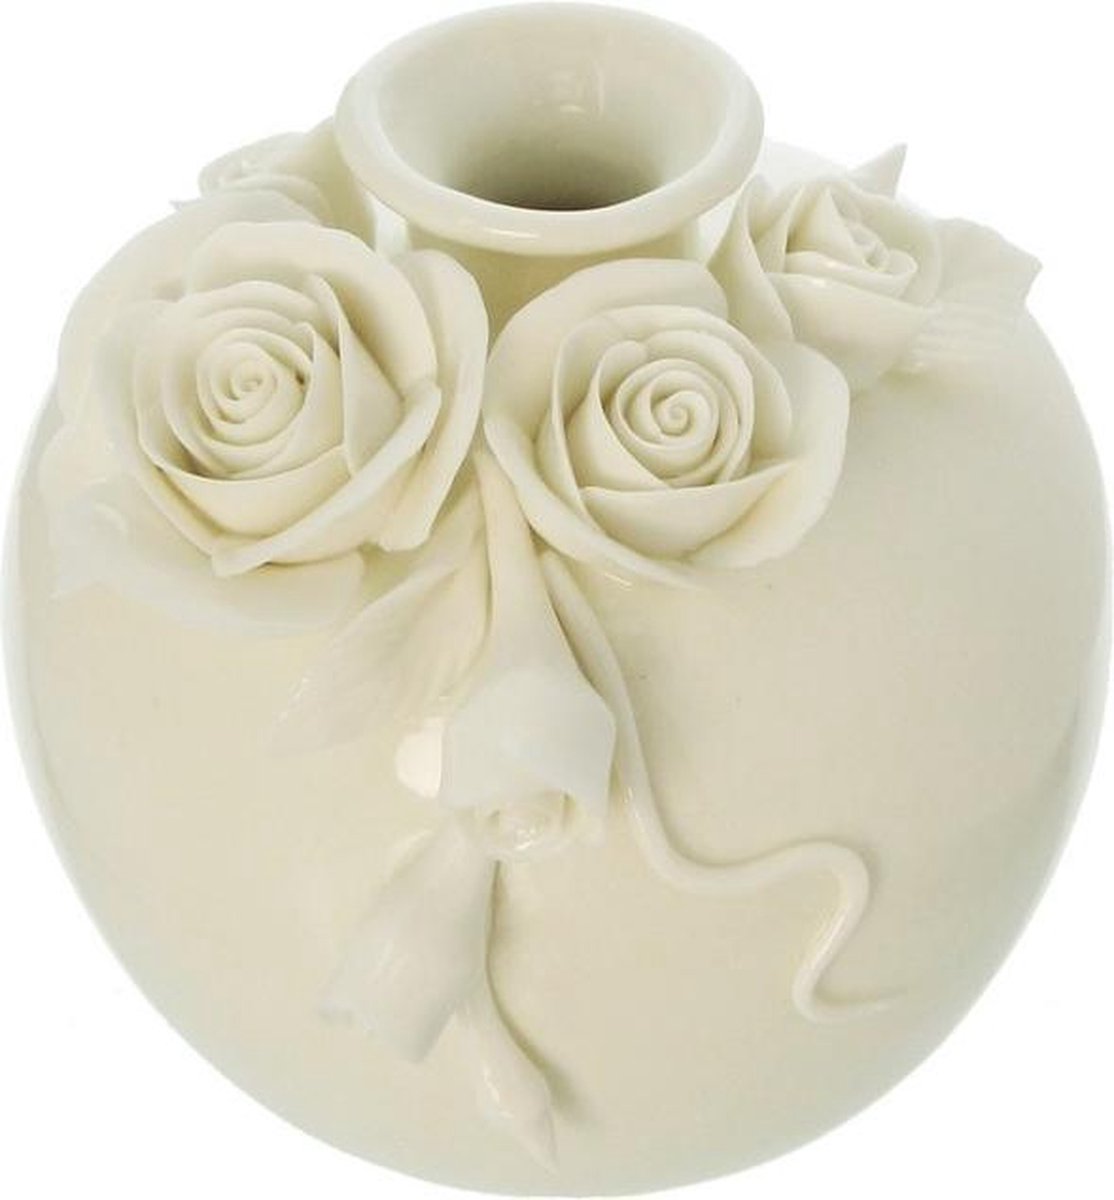 Bezwaar ritme sociaal Bloem roos vaasje wit porselein thema bloemen | bol.com